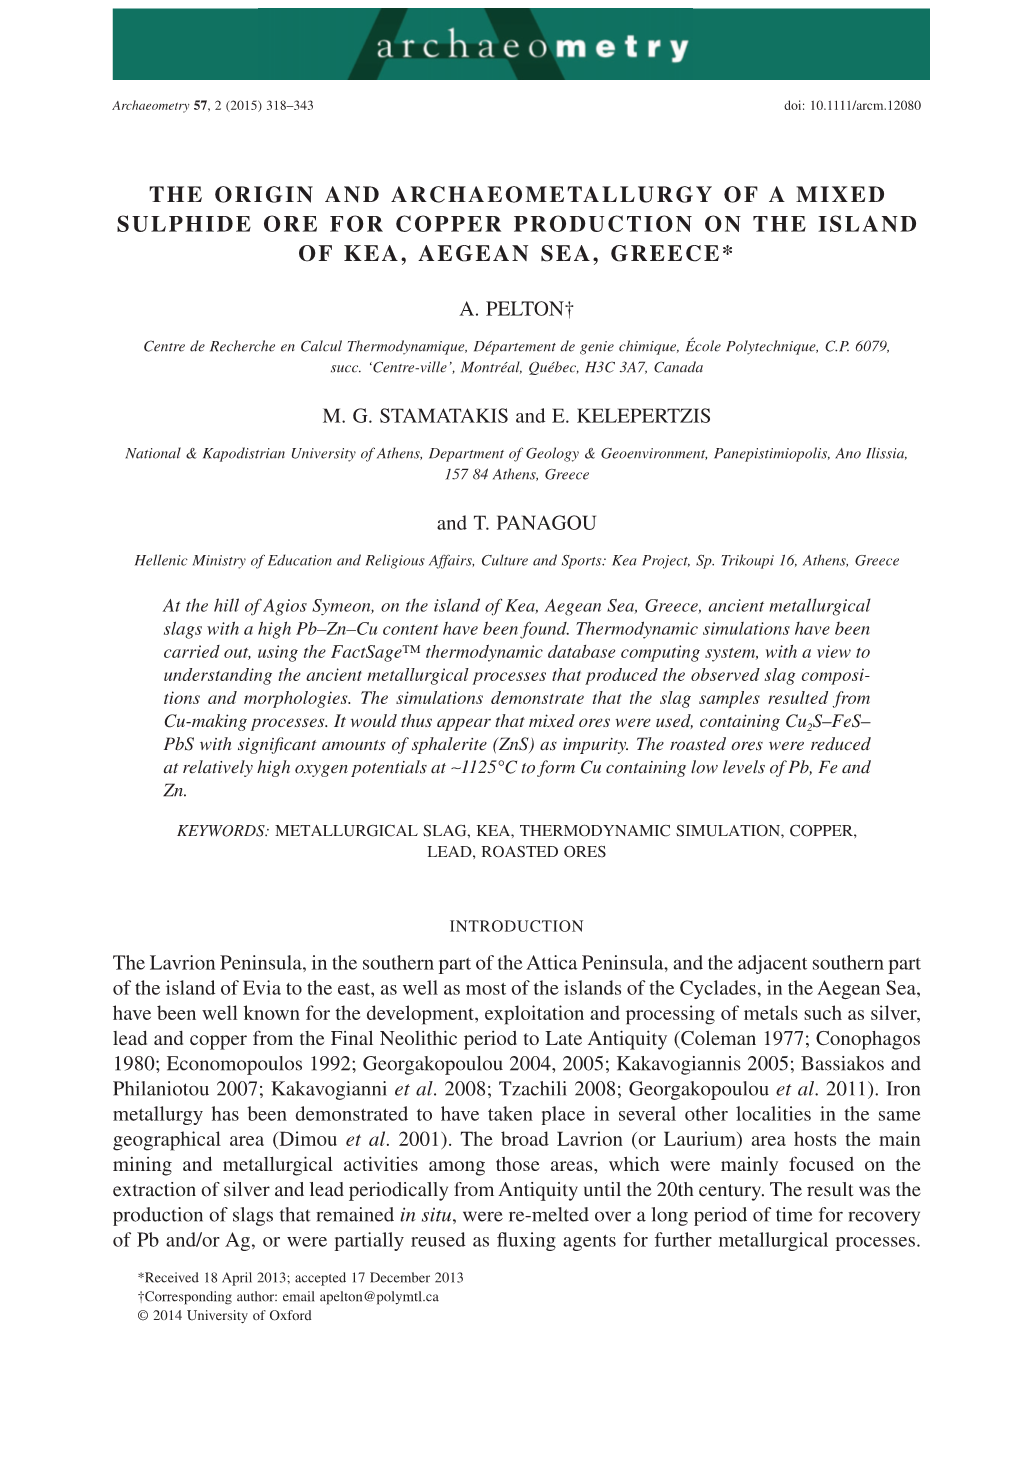 The Origin and Archaeometallurgy of a Mixed Sulphide Ore for Copper Production on the Island of Kea, Aegean Sea, Greece*